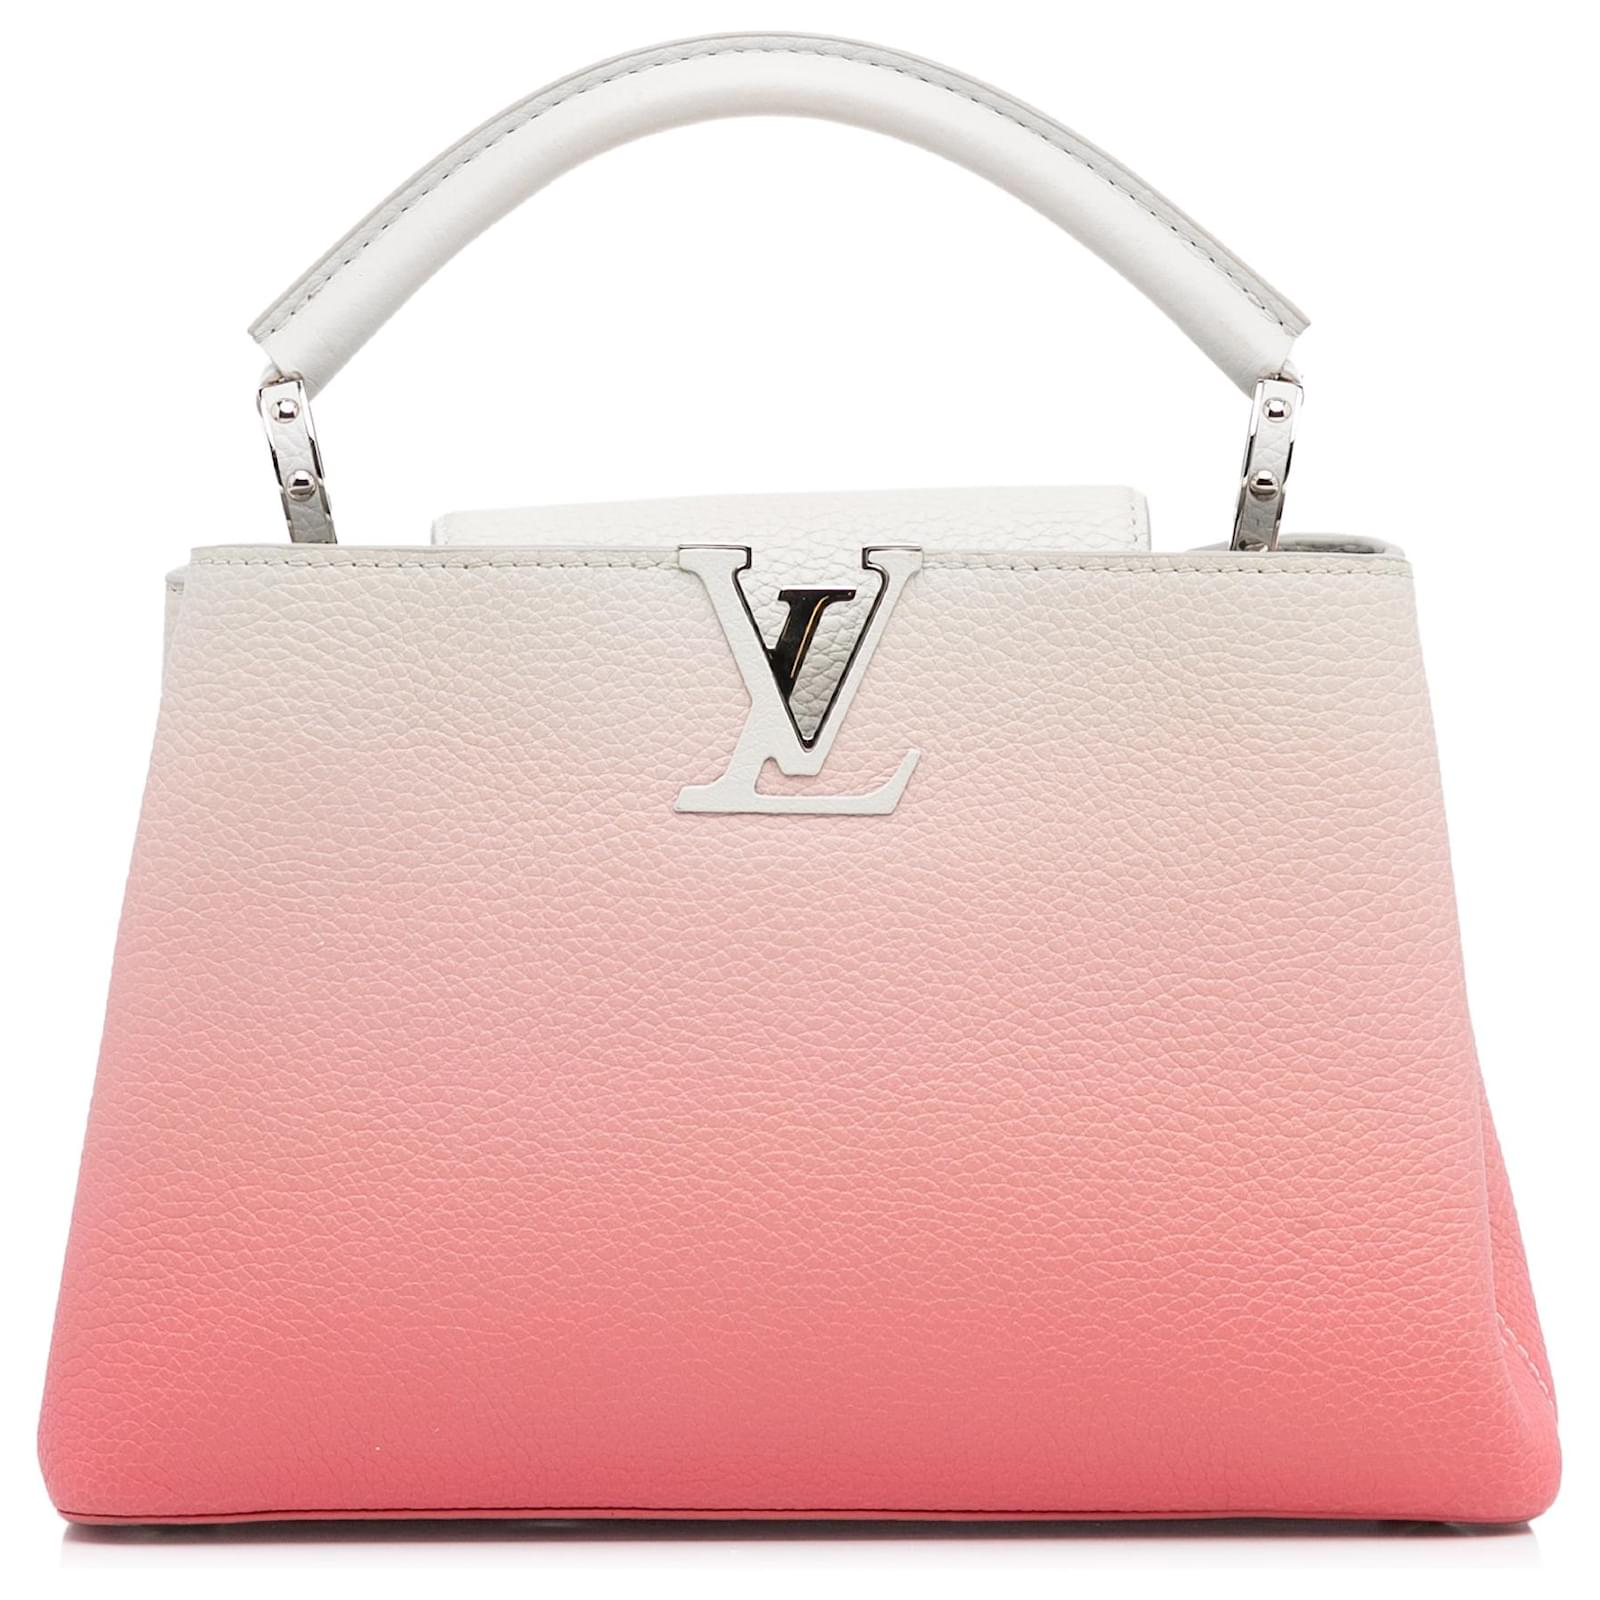 Handbag Ombre Louis Vuitton Leather for woman